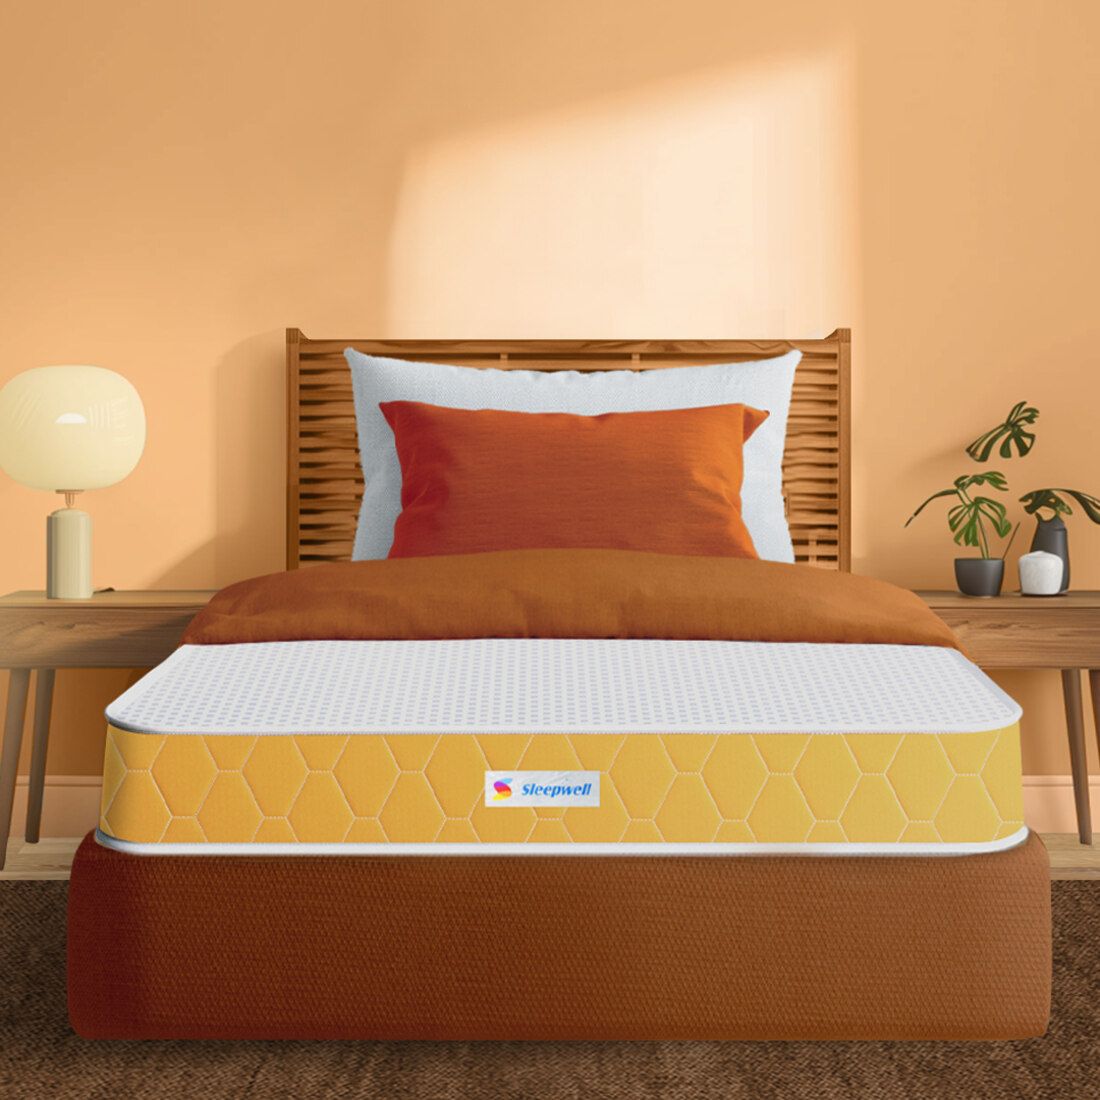 Sleepwell Dual Mattress | Reversible | High Density (HD) Foam | 6-inch Single Bed Size,?Medium Soft & Hard (Orange,75x30X6)